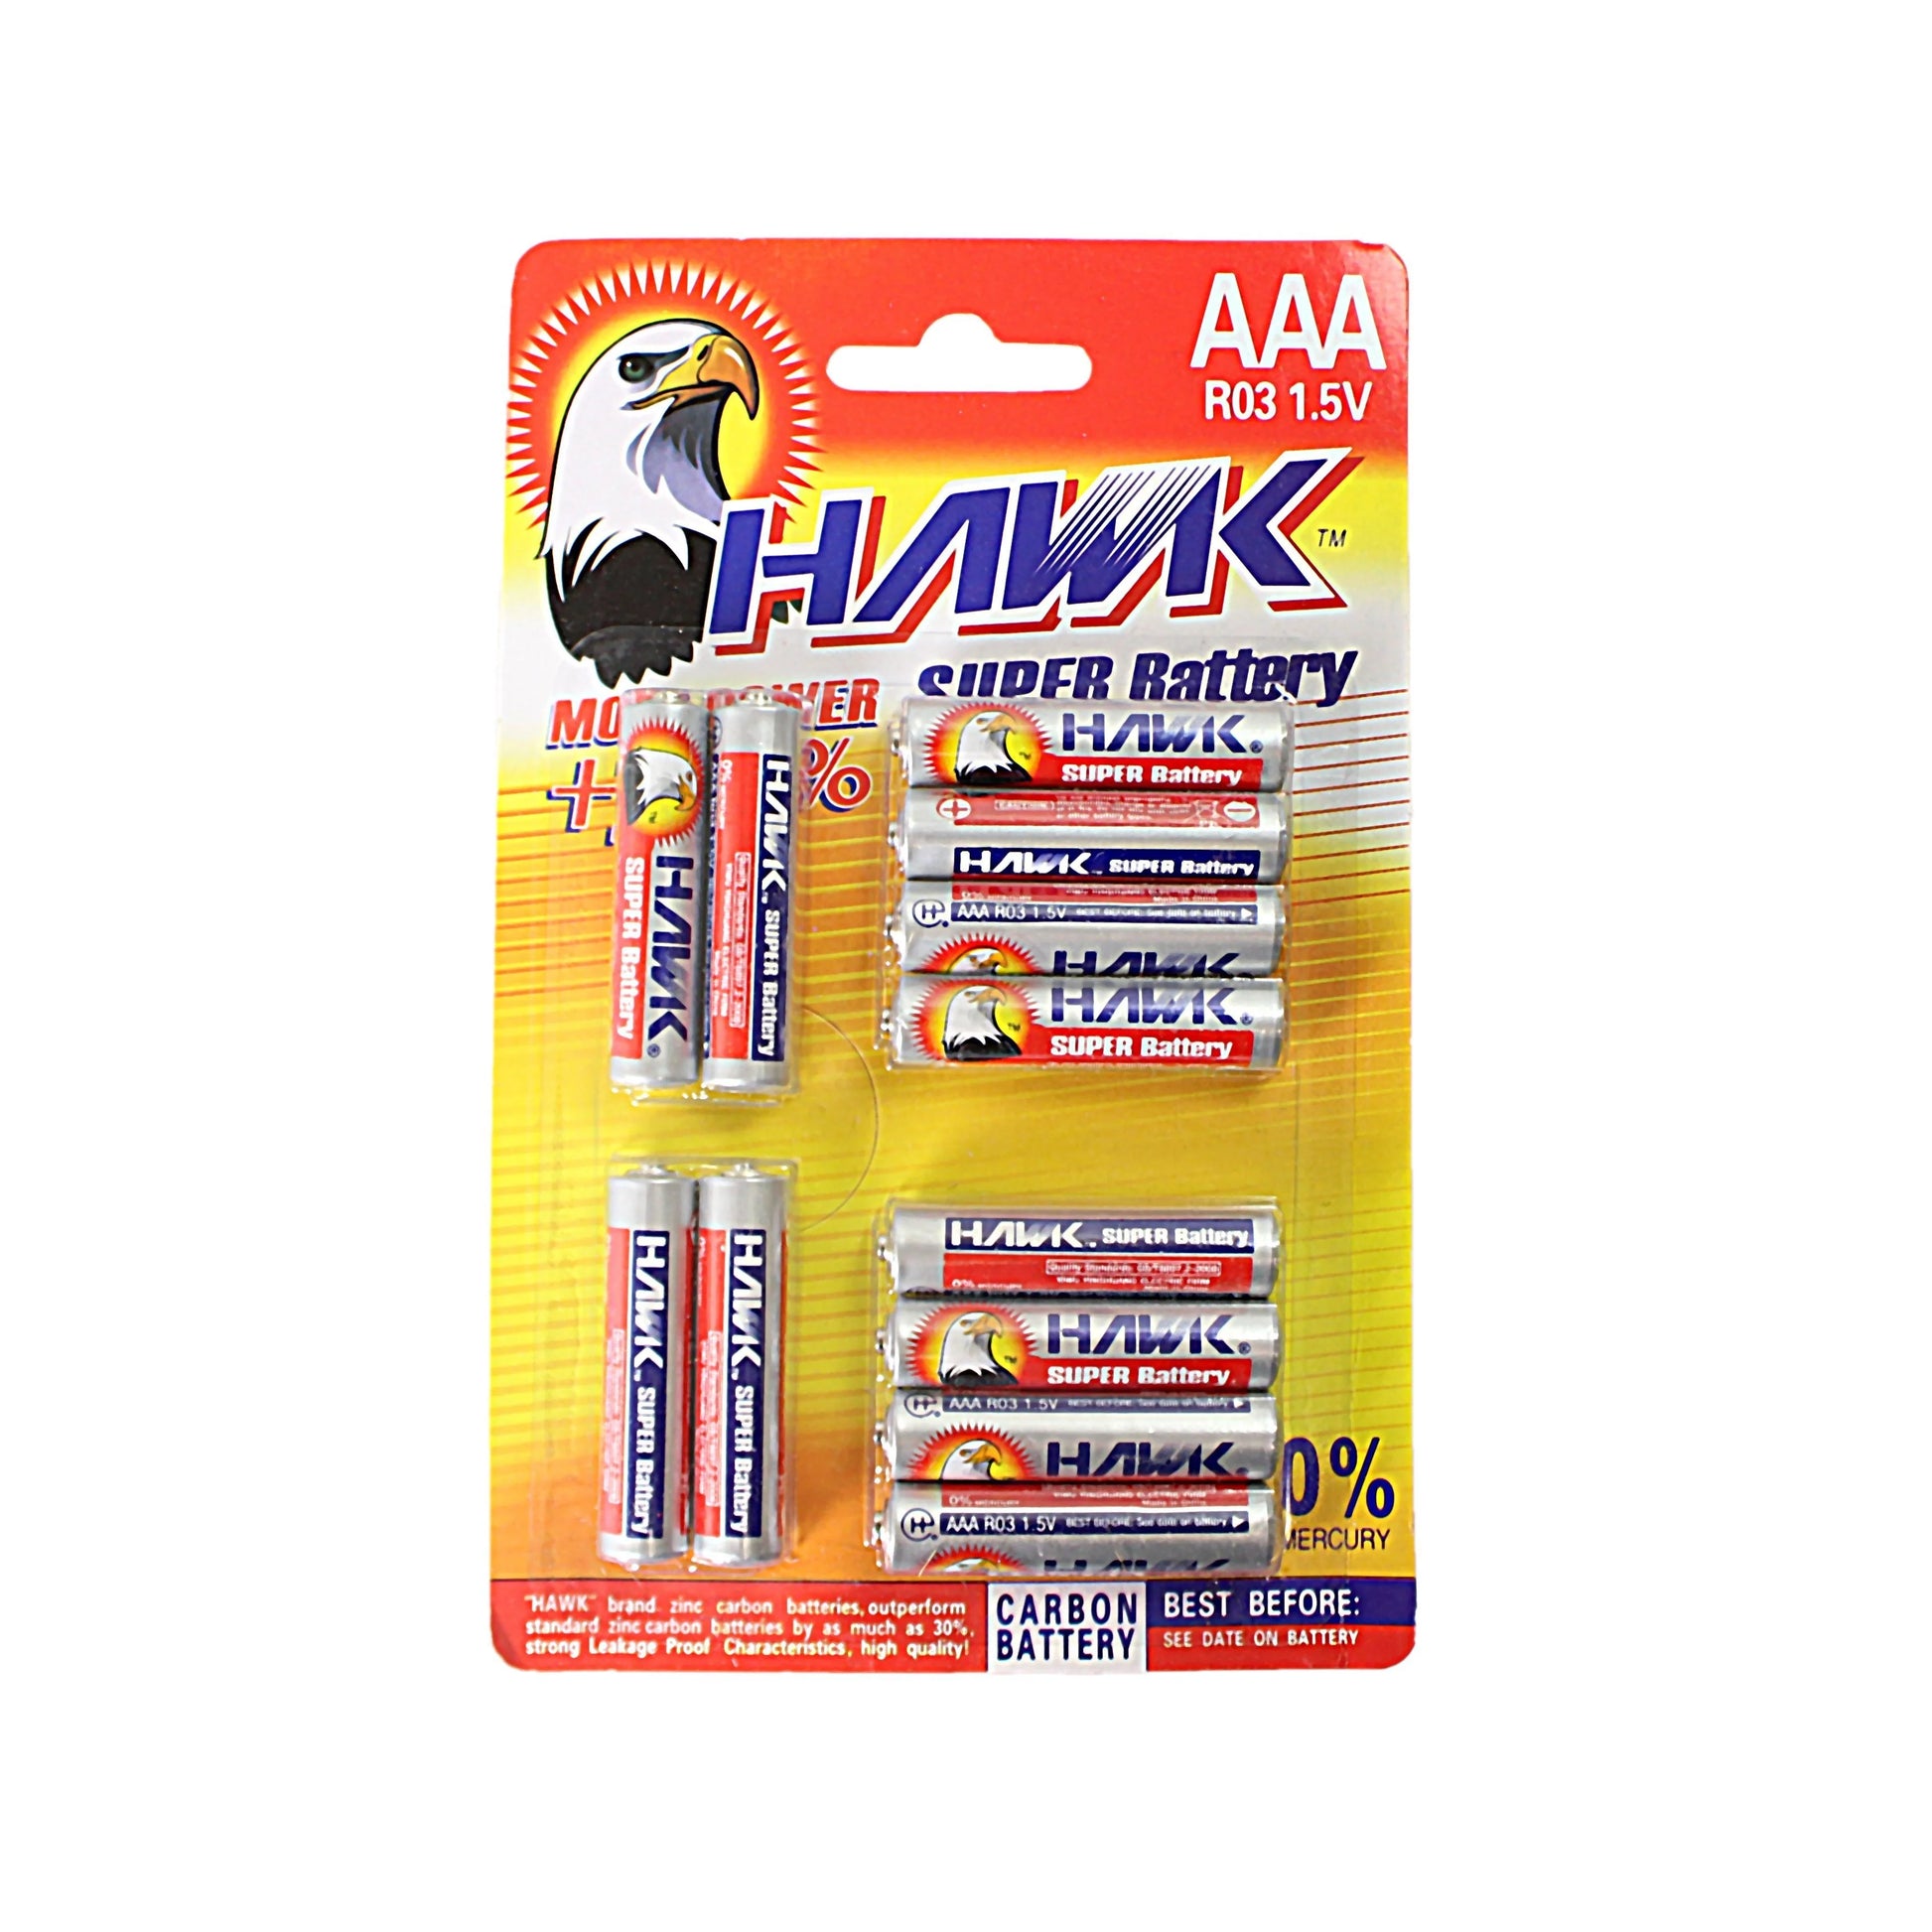 12 Pack Hawk Super Battery AAA 1.5V Carbon Battery - Homeware Discounts